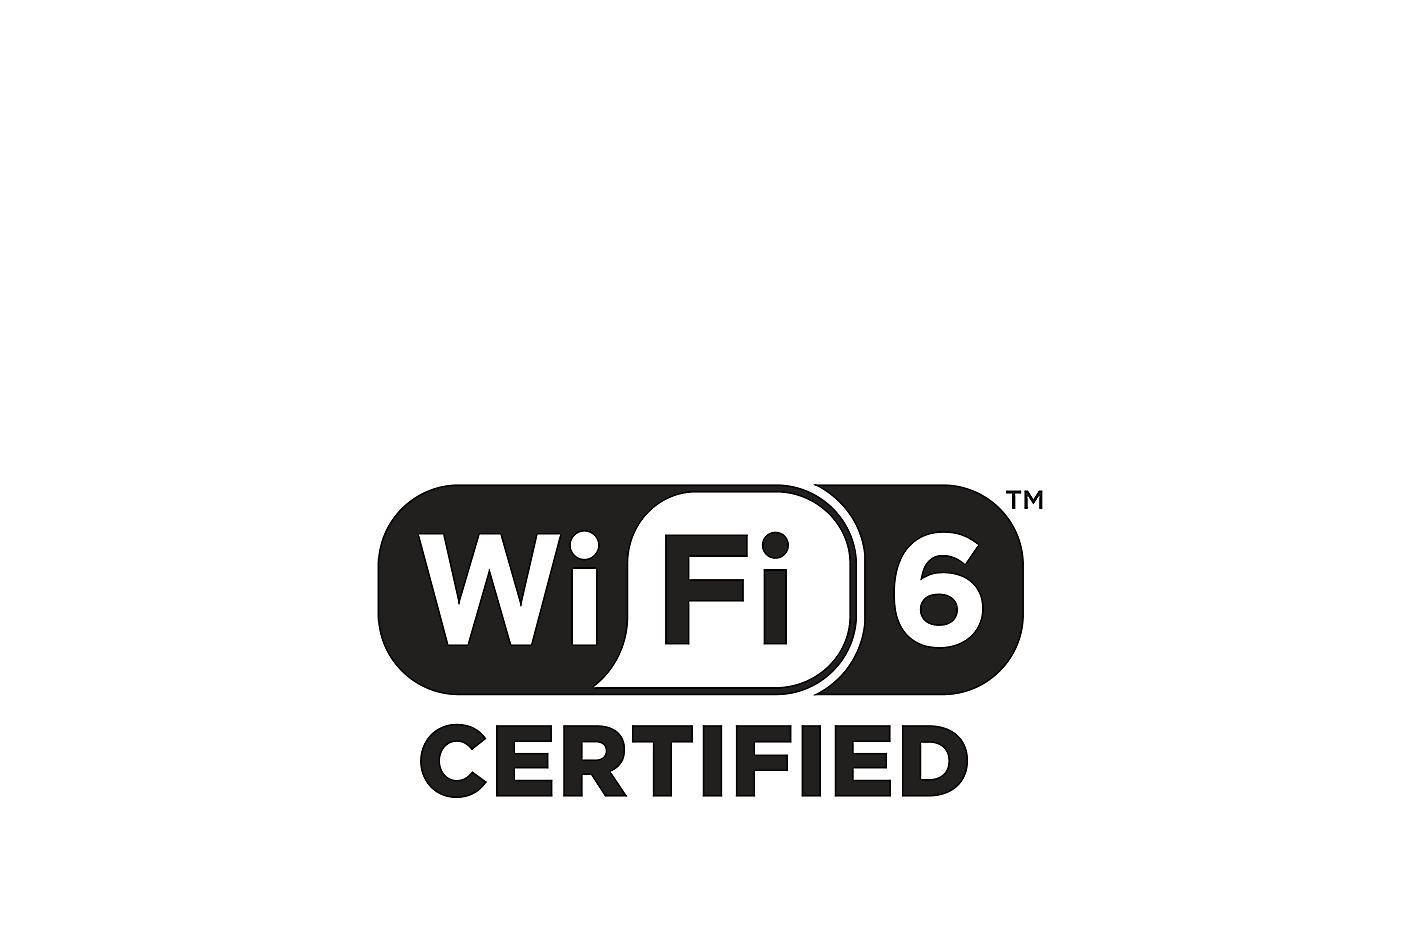 Wi-Fi 6 certified 標誌